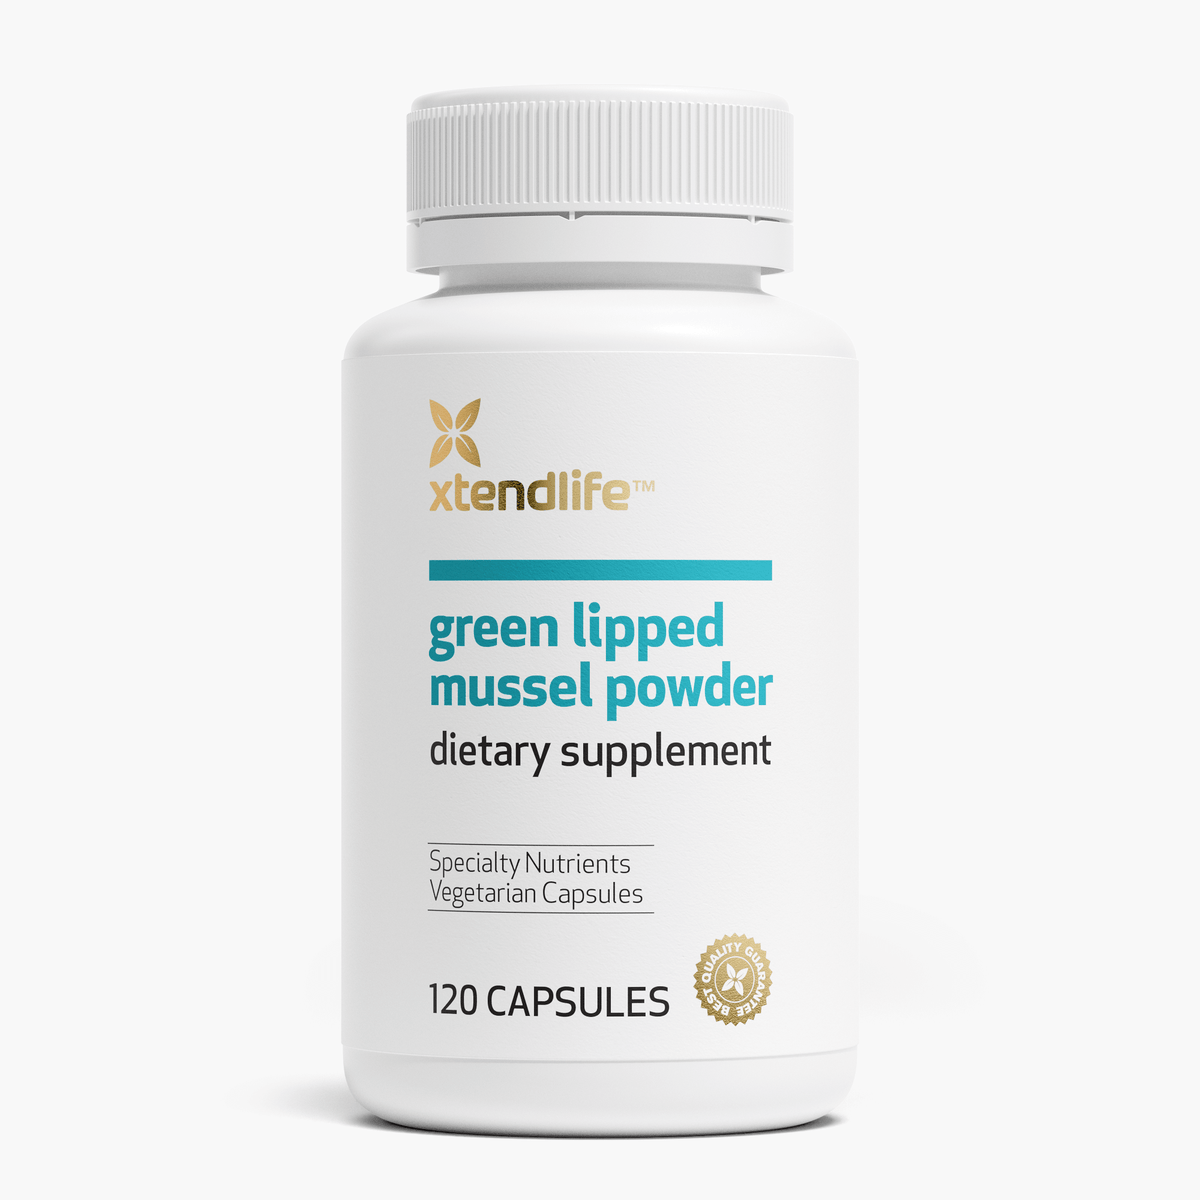 Green Lipped Mussel Powder dietary supplement